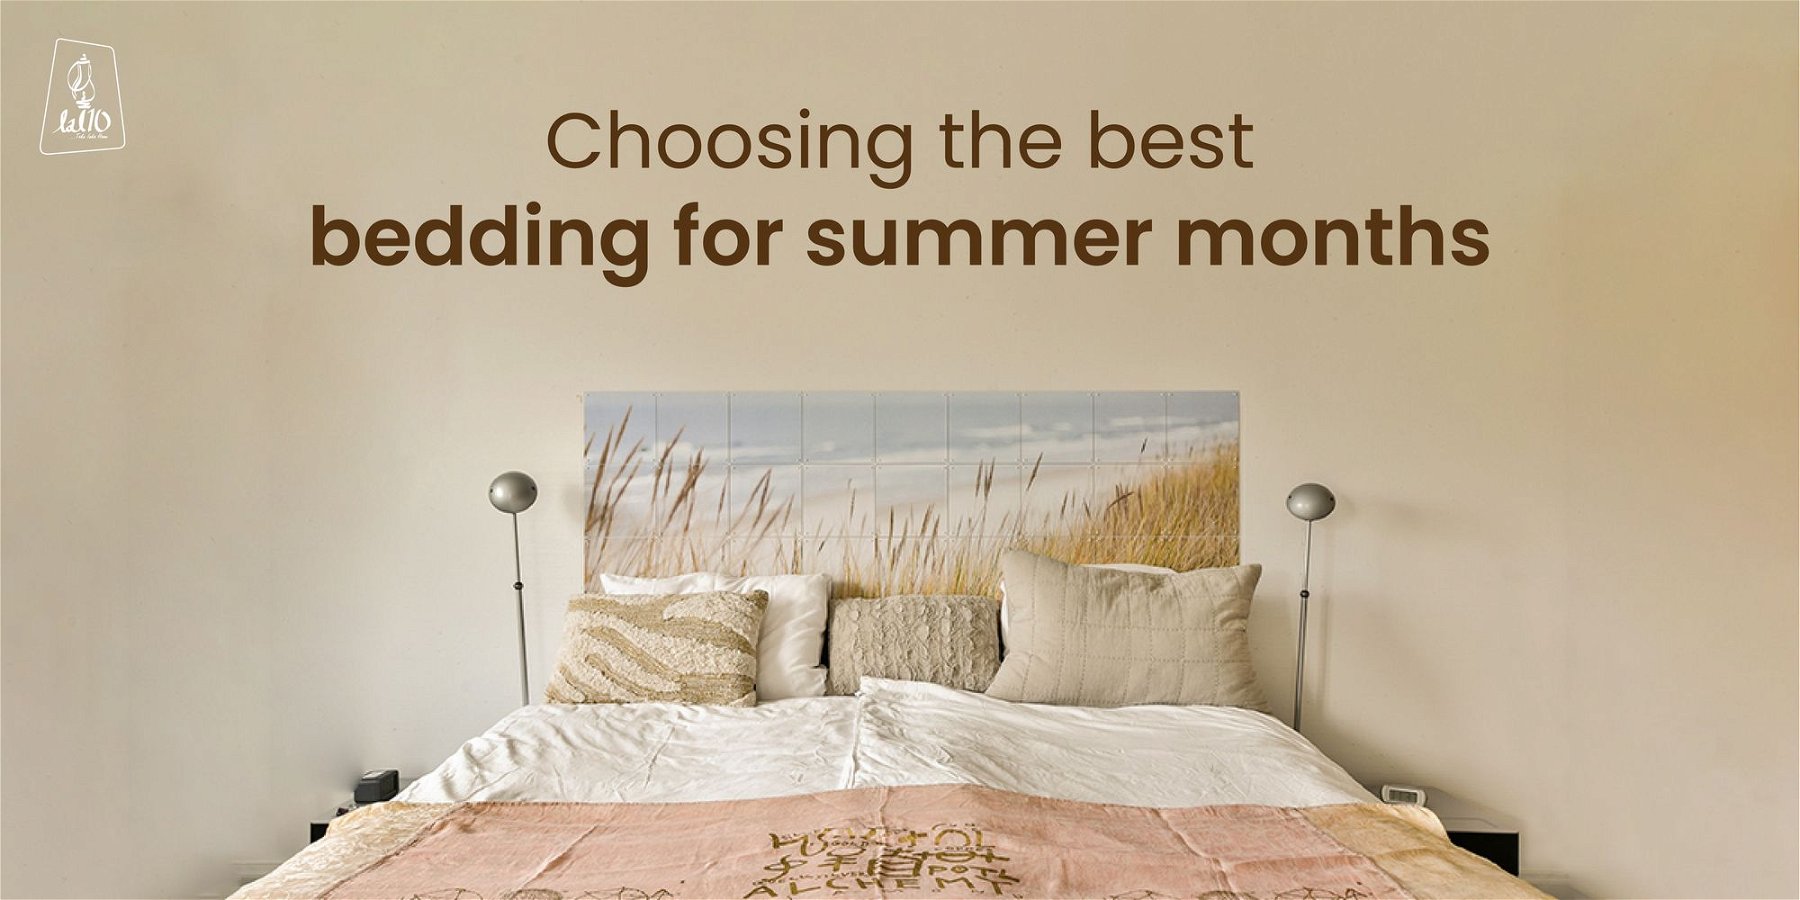 Choosing the best bedding for summer months